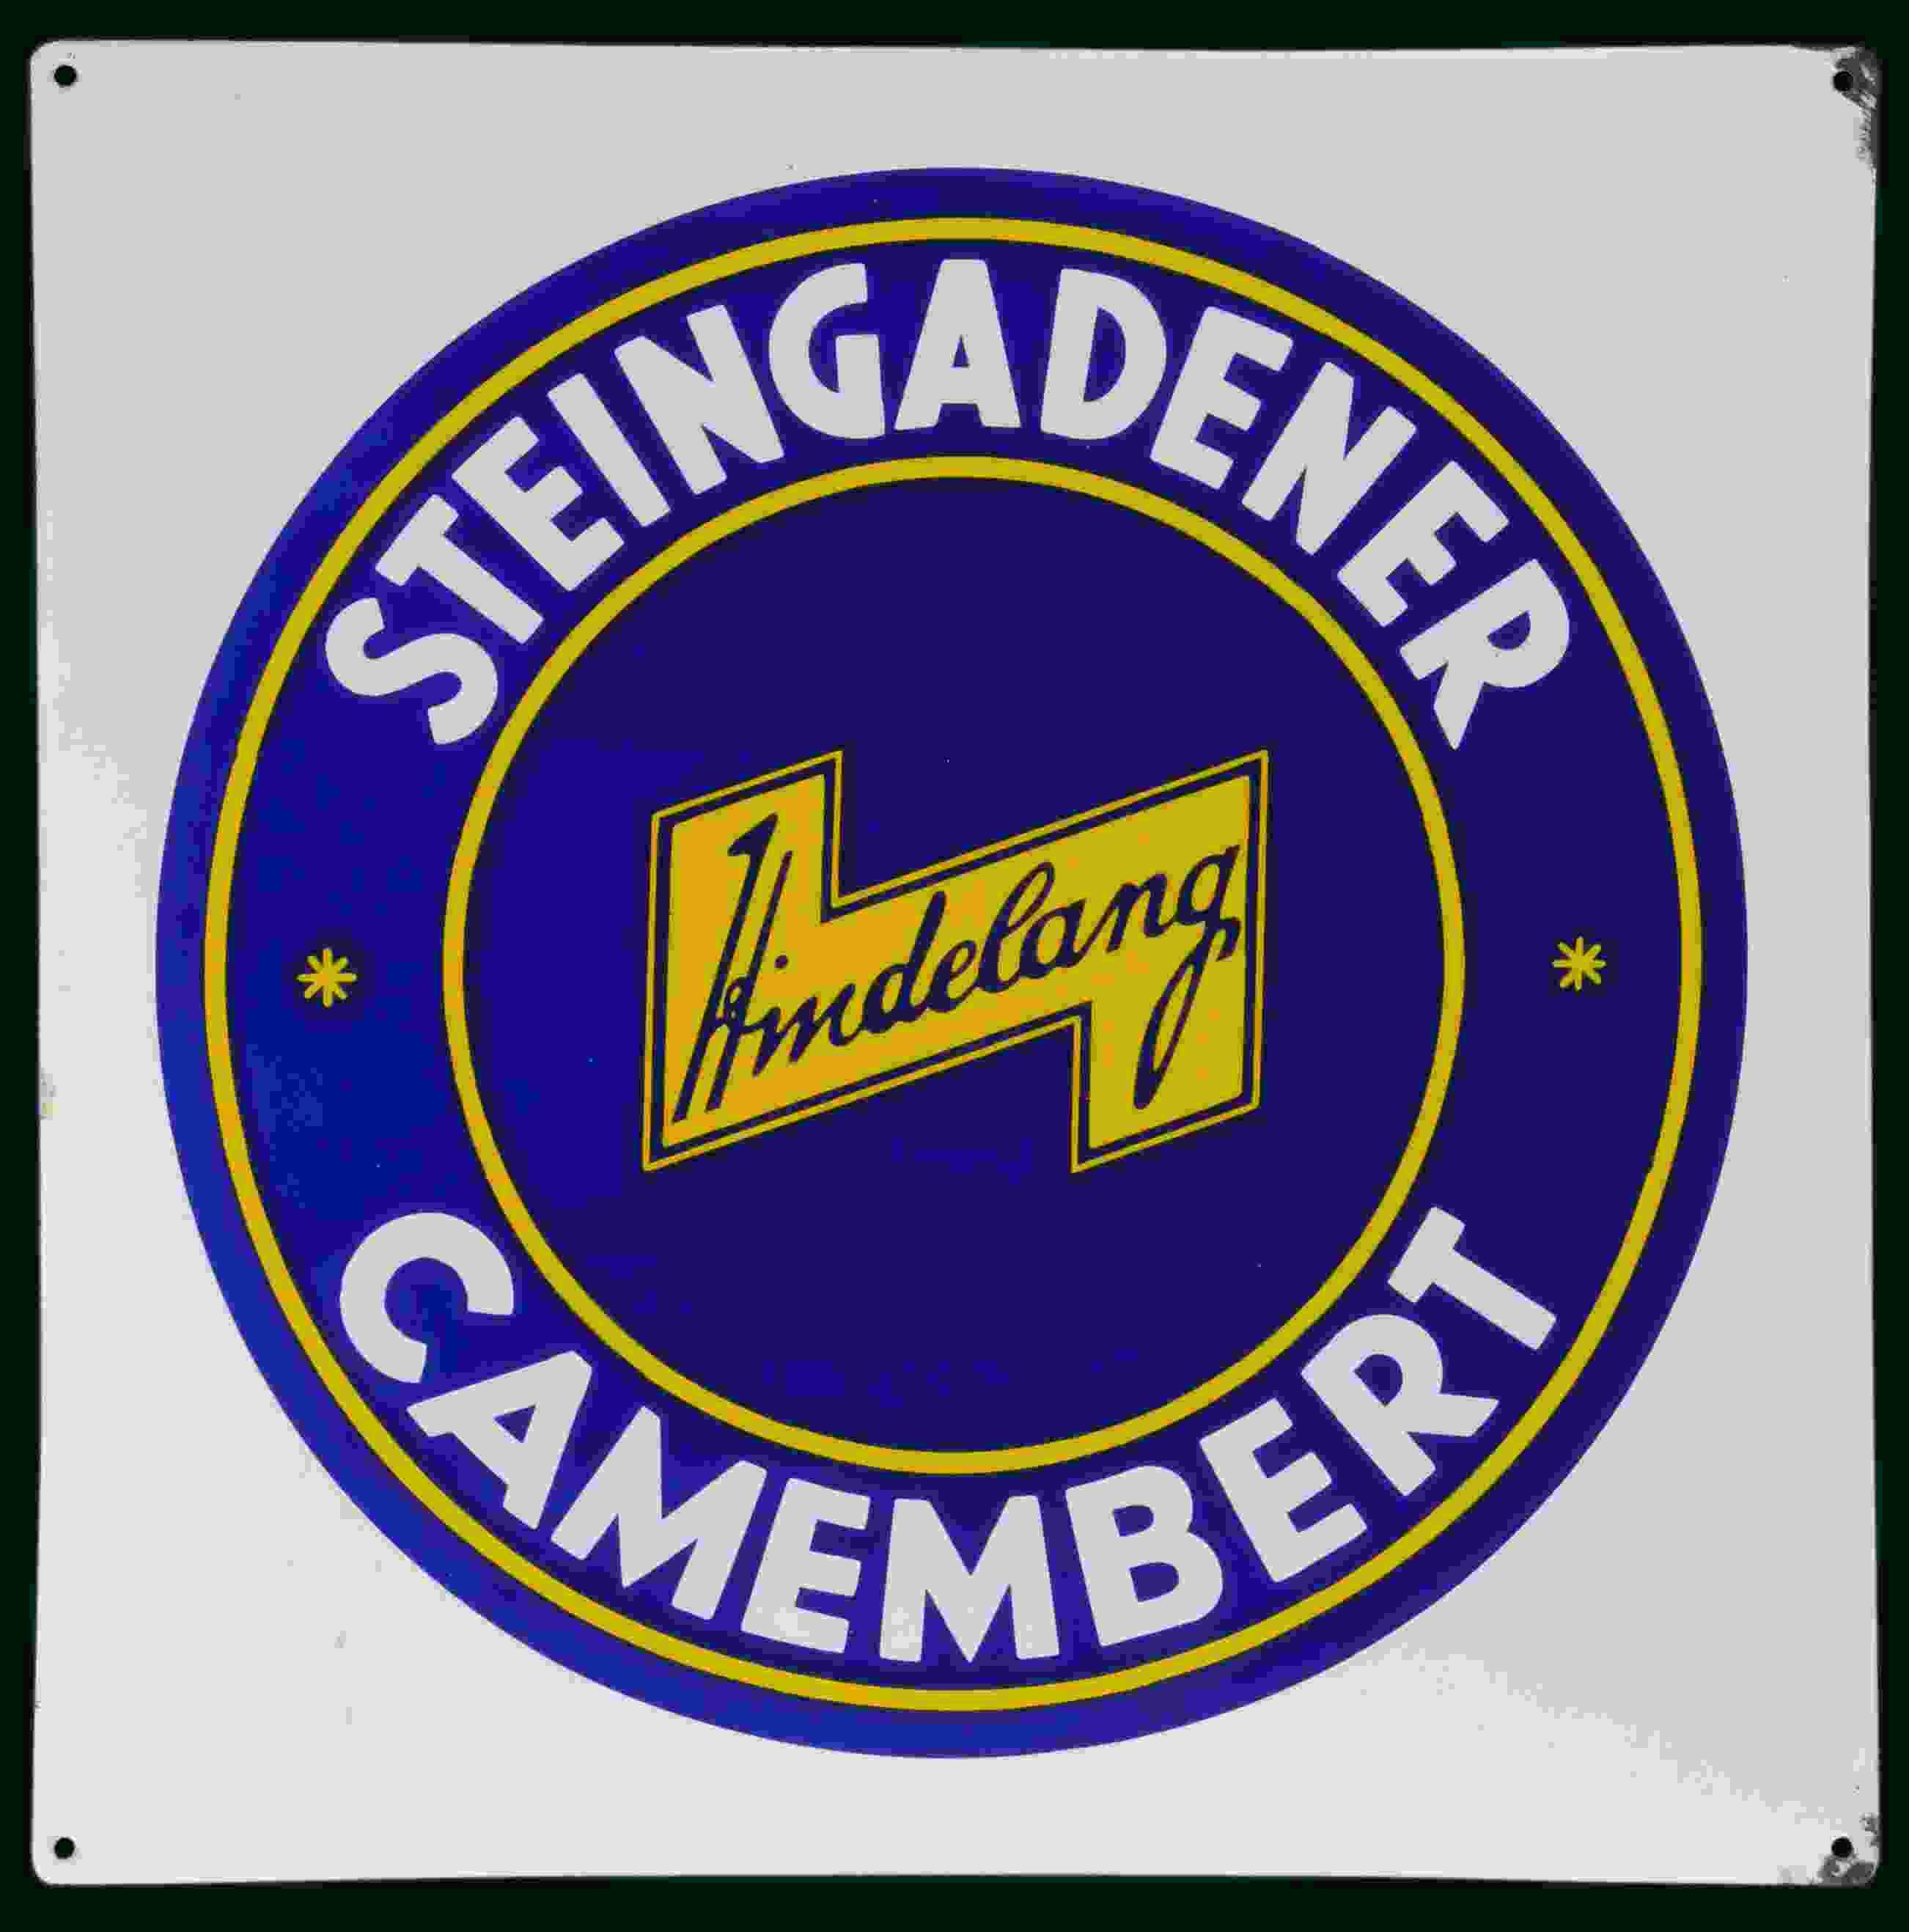 Steingadener Camembert Hindelang 